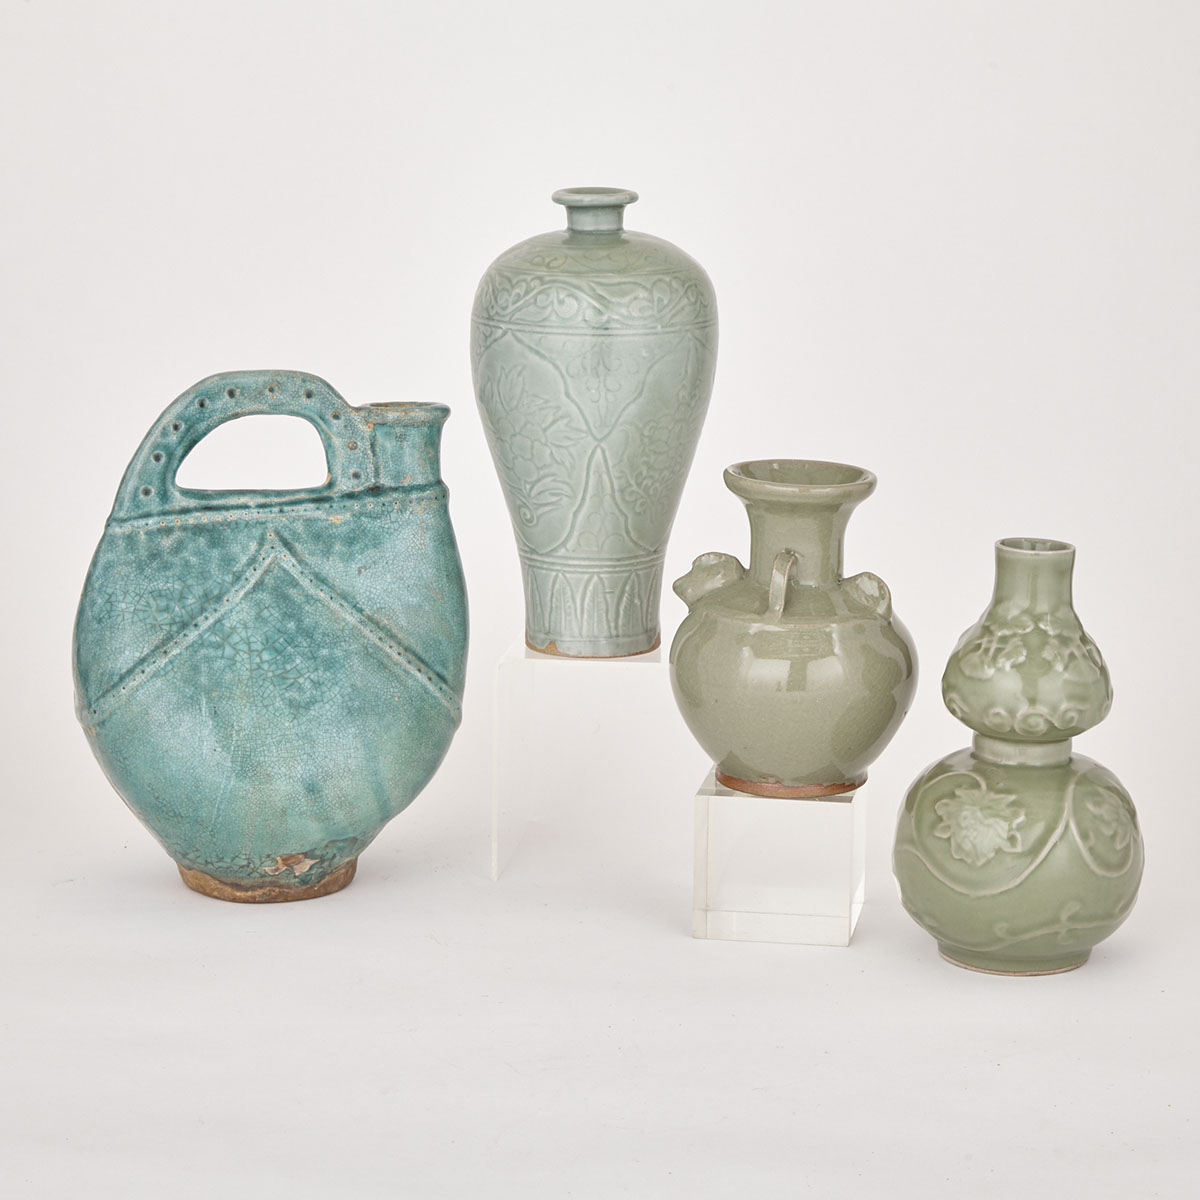 Group of Four Green-Glazed Ceramics